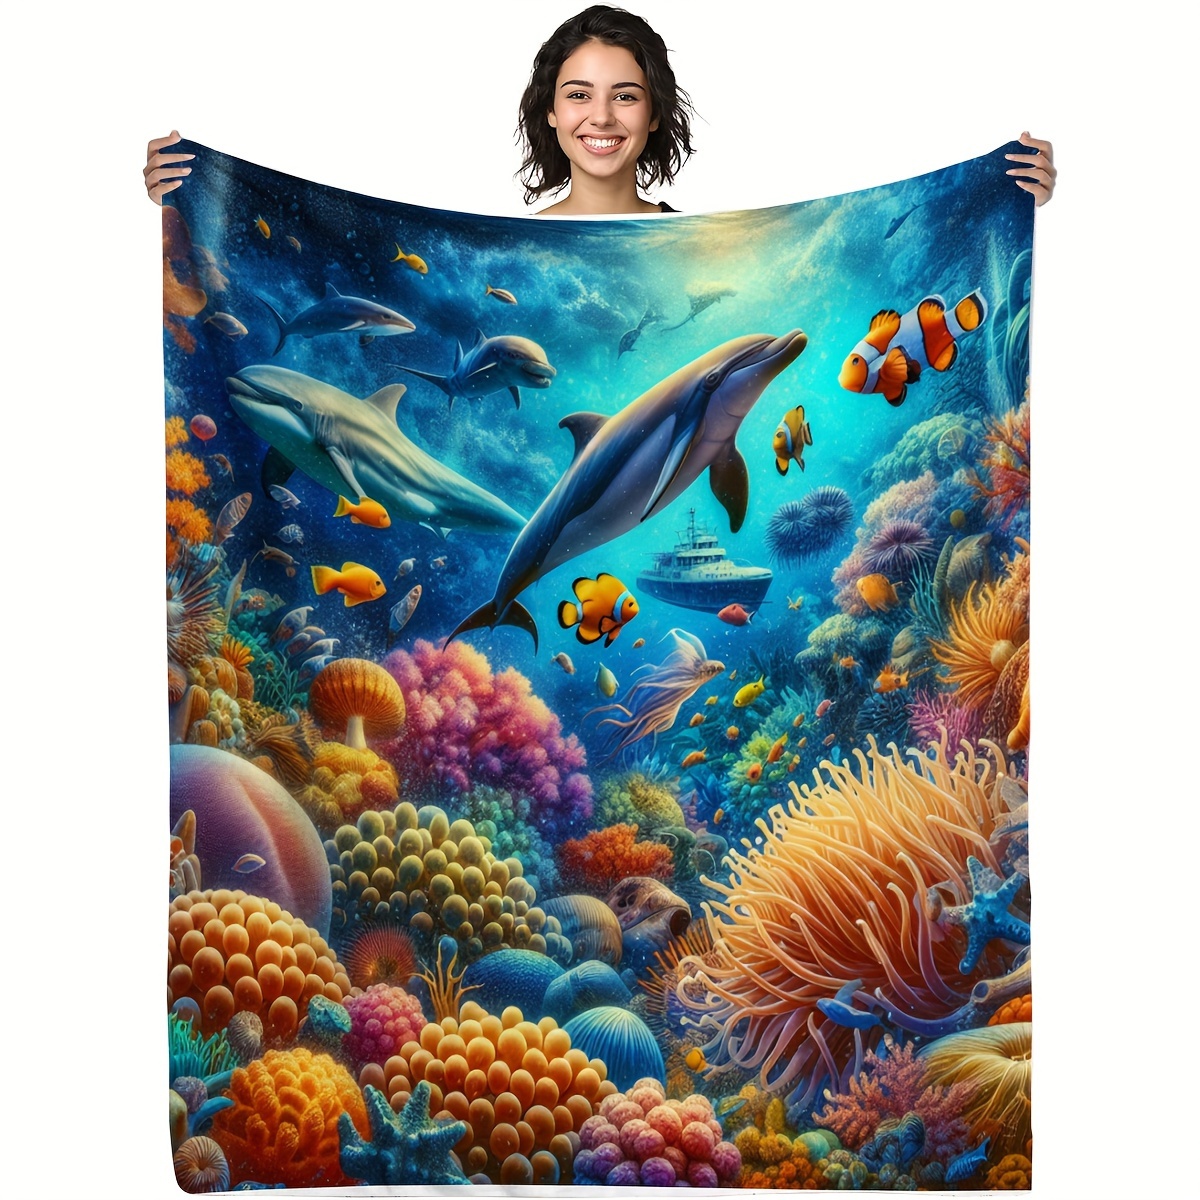 

1pc Underwater World Fish Blanket Gifts Blanket For Ocean Animal Lovers Blanket Soft Flannel Sofa Blanket Tv Blanket For Couch Sofa Office Bed Camping Travel, Multi-purpose Gift Blanket For All Season